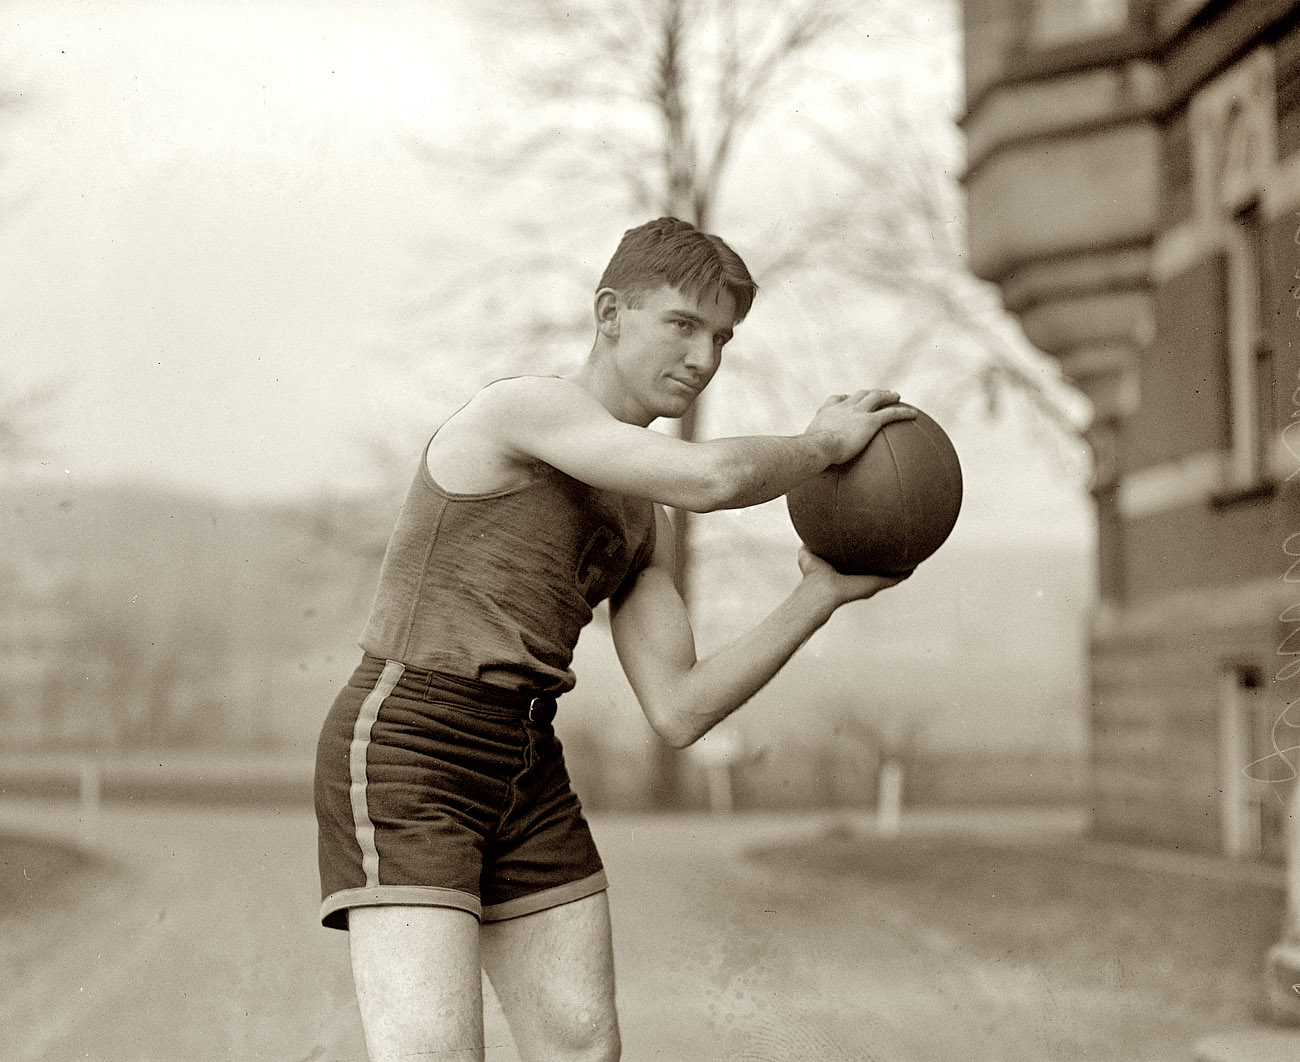 Washington, D.C. "Davis, Gallaudet '24." Another Gallaudet University basketball player. View full size. 4x5 glass negative, National Photo Company Collection.